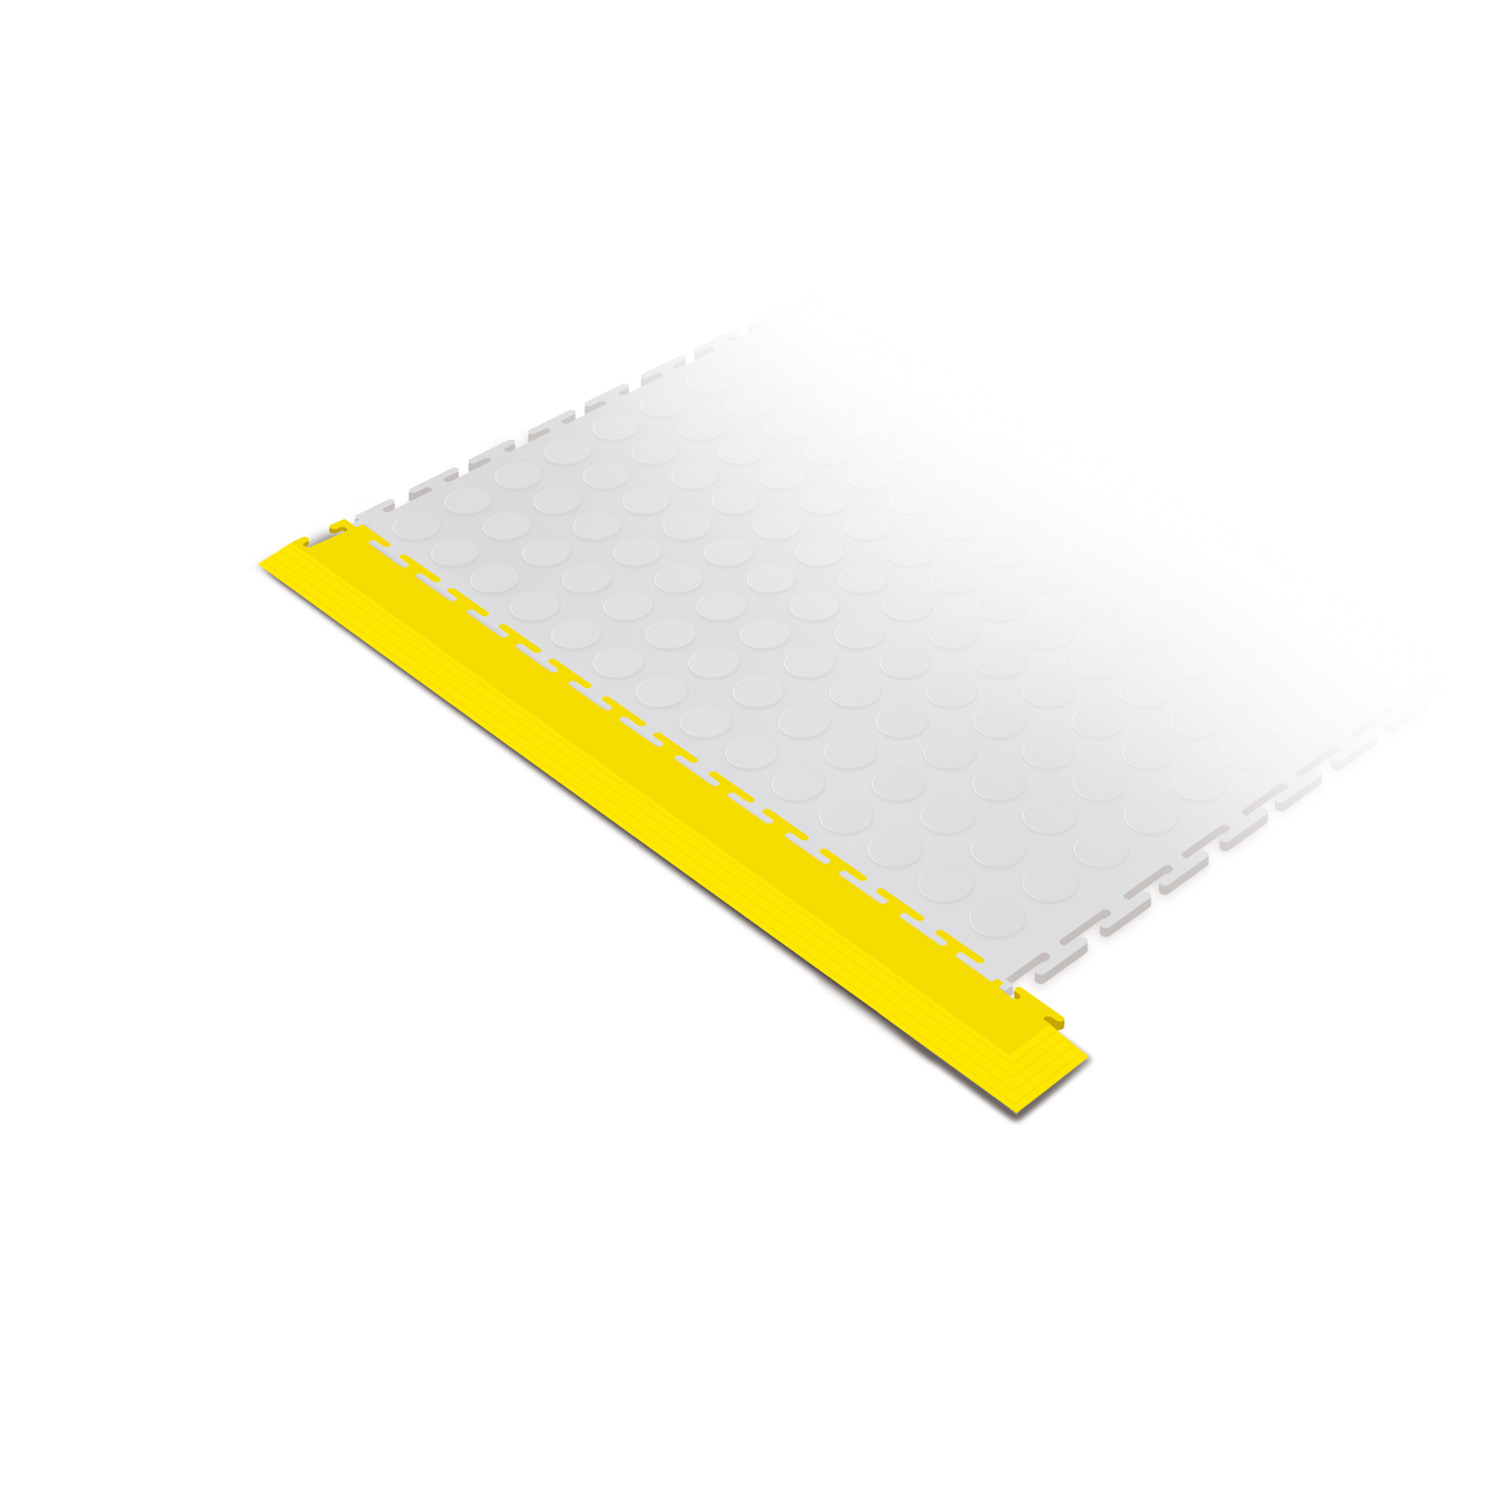 Heavy-duty corner edge ramp tile (yellow)